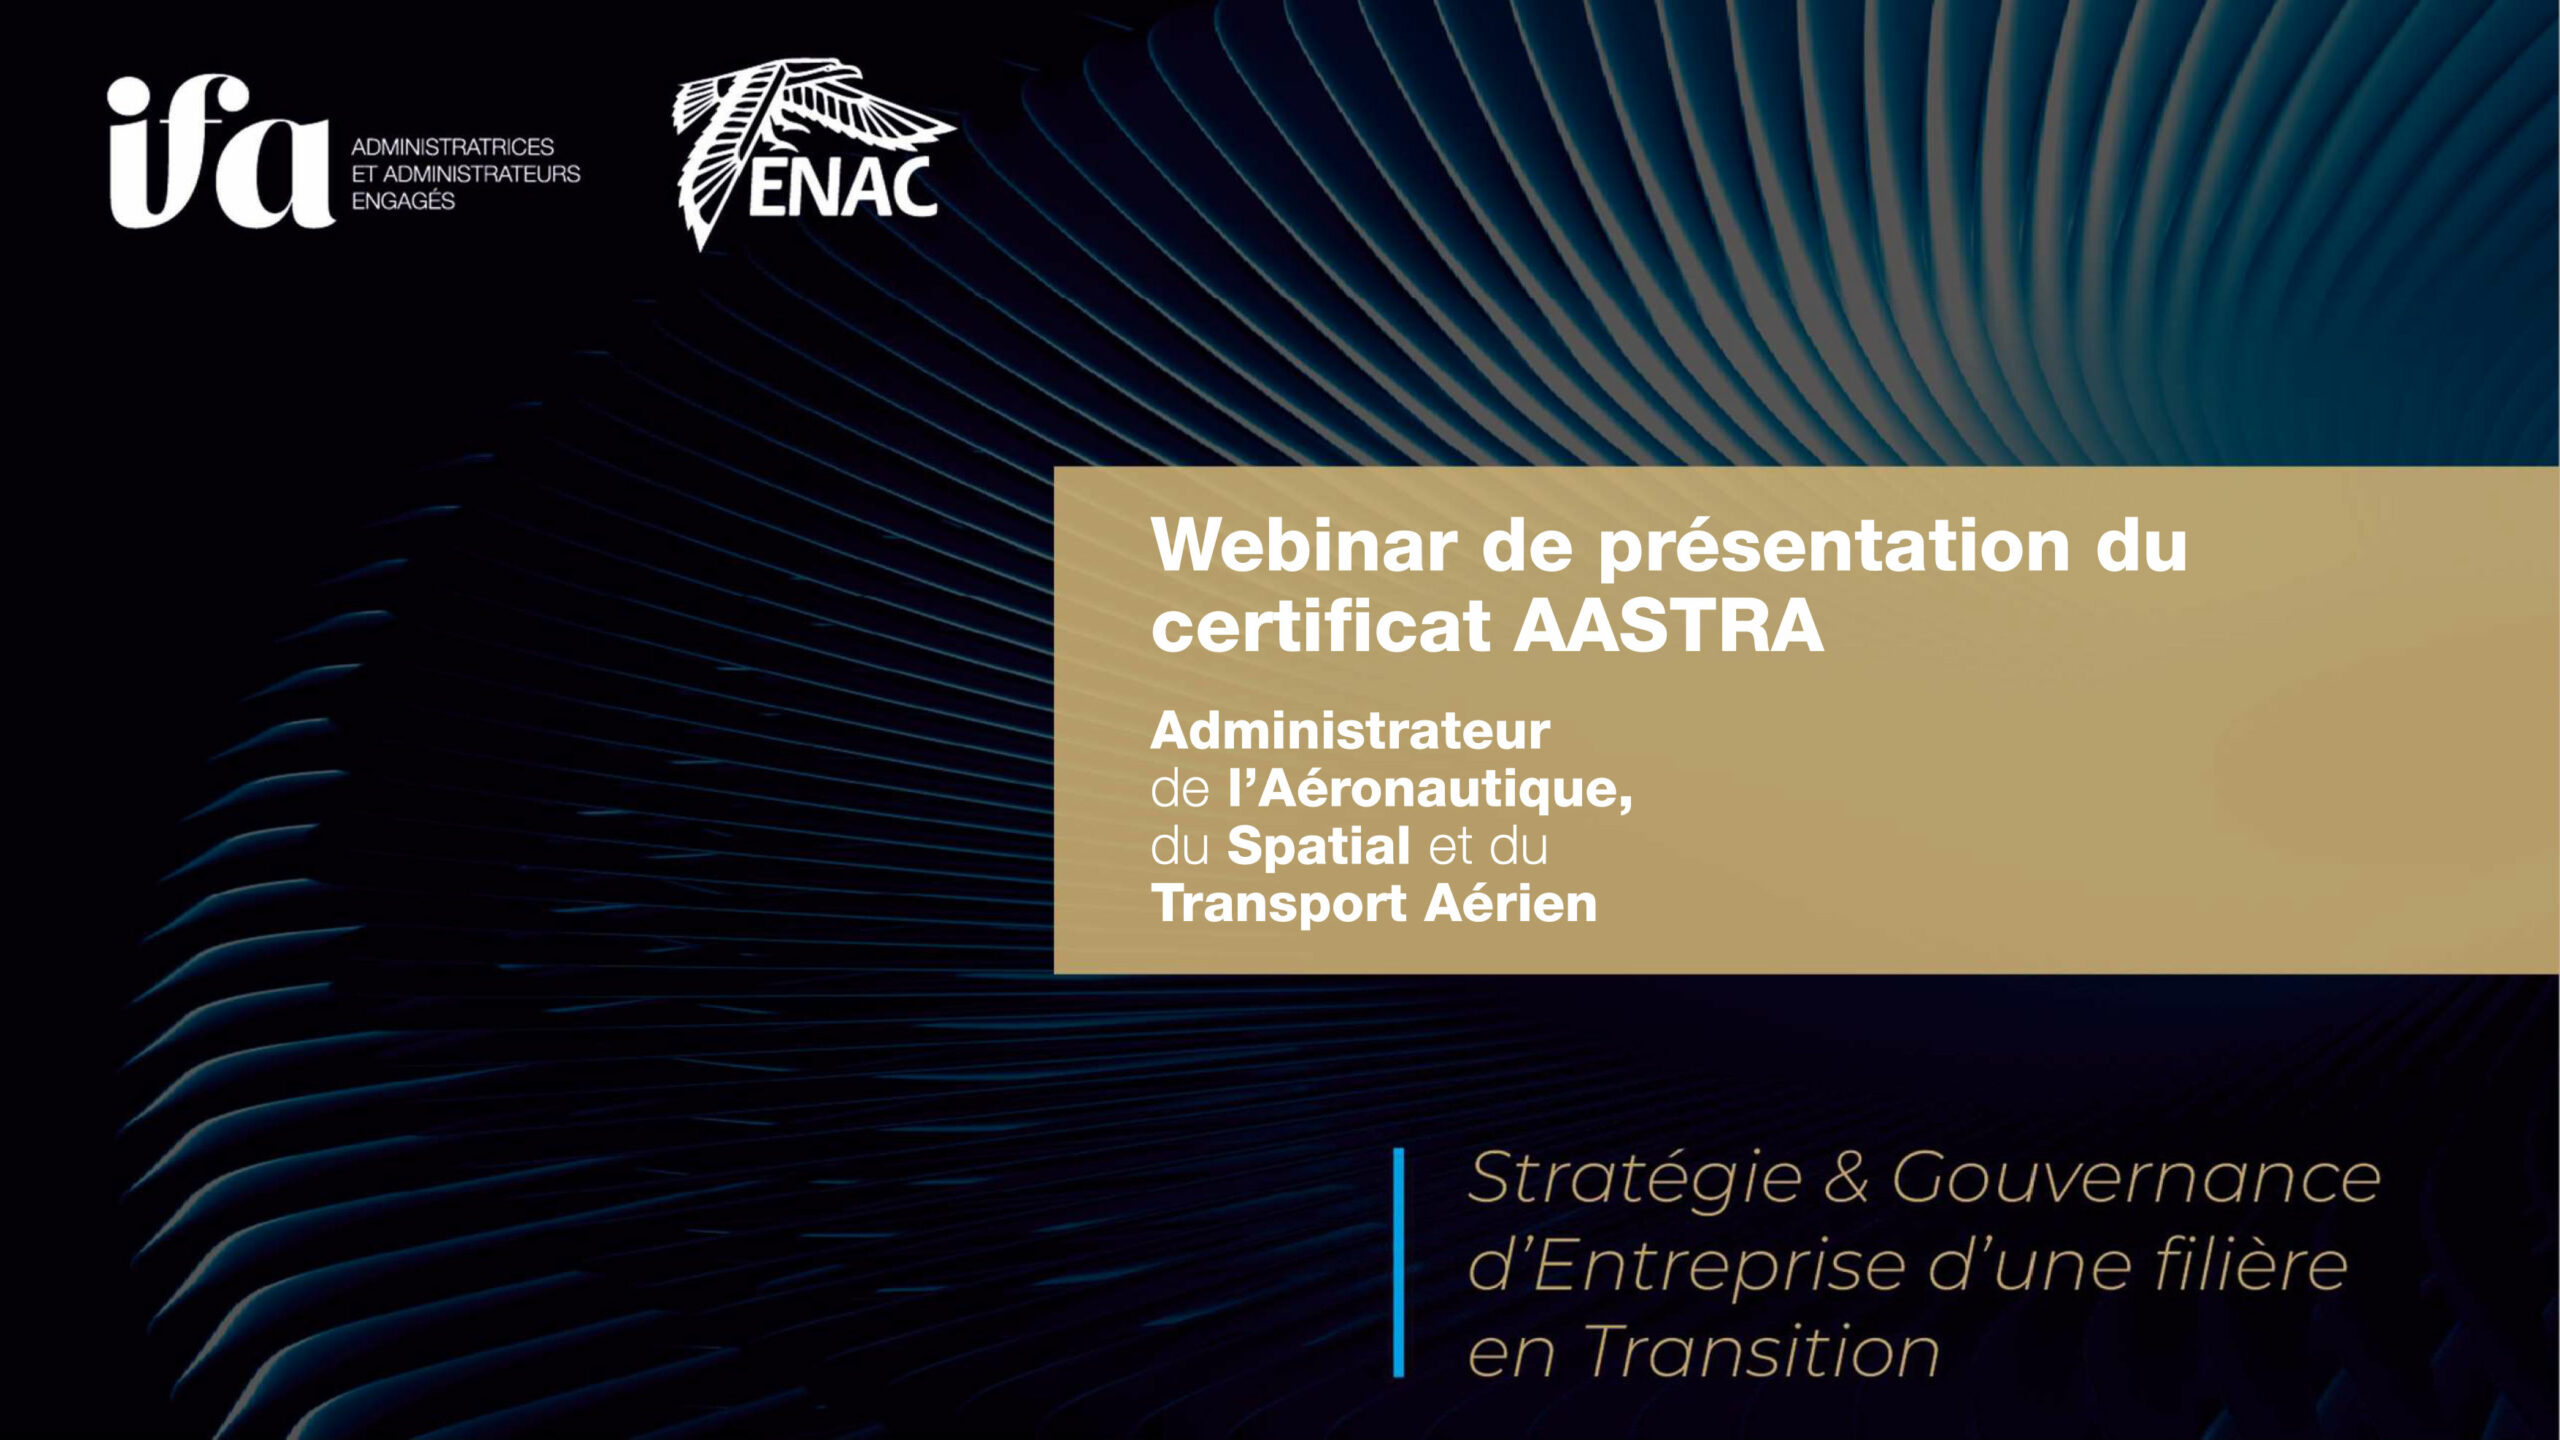 Wébinar IFA/ENAC - Présentation du certificat AASTRA